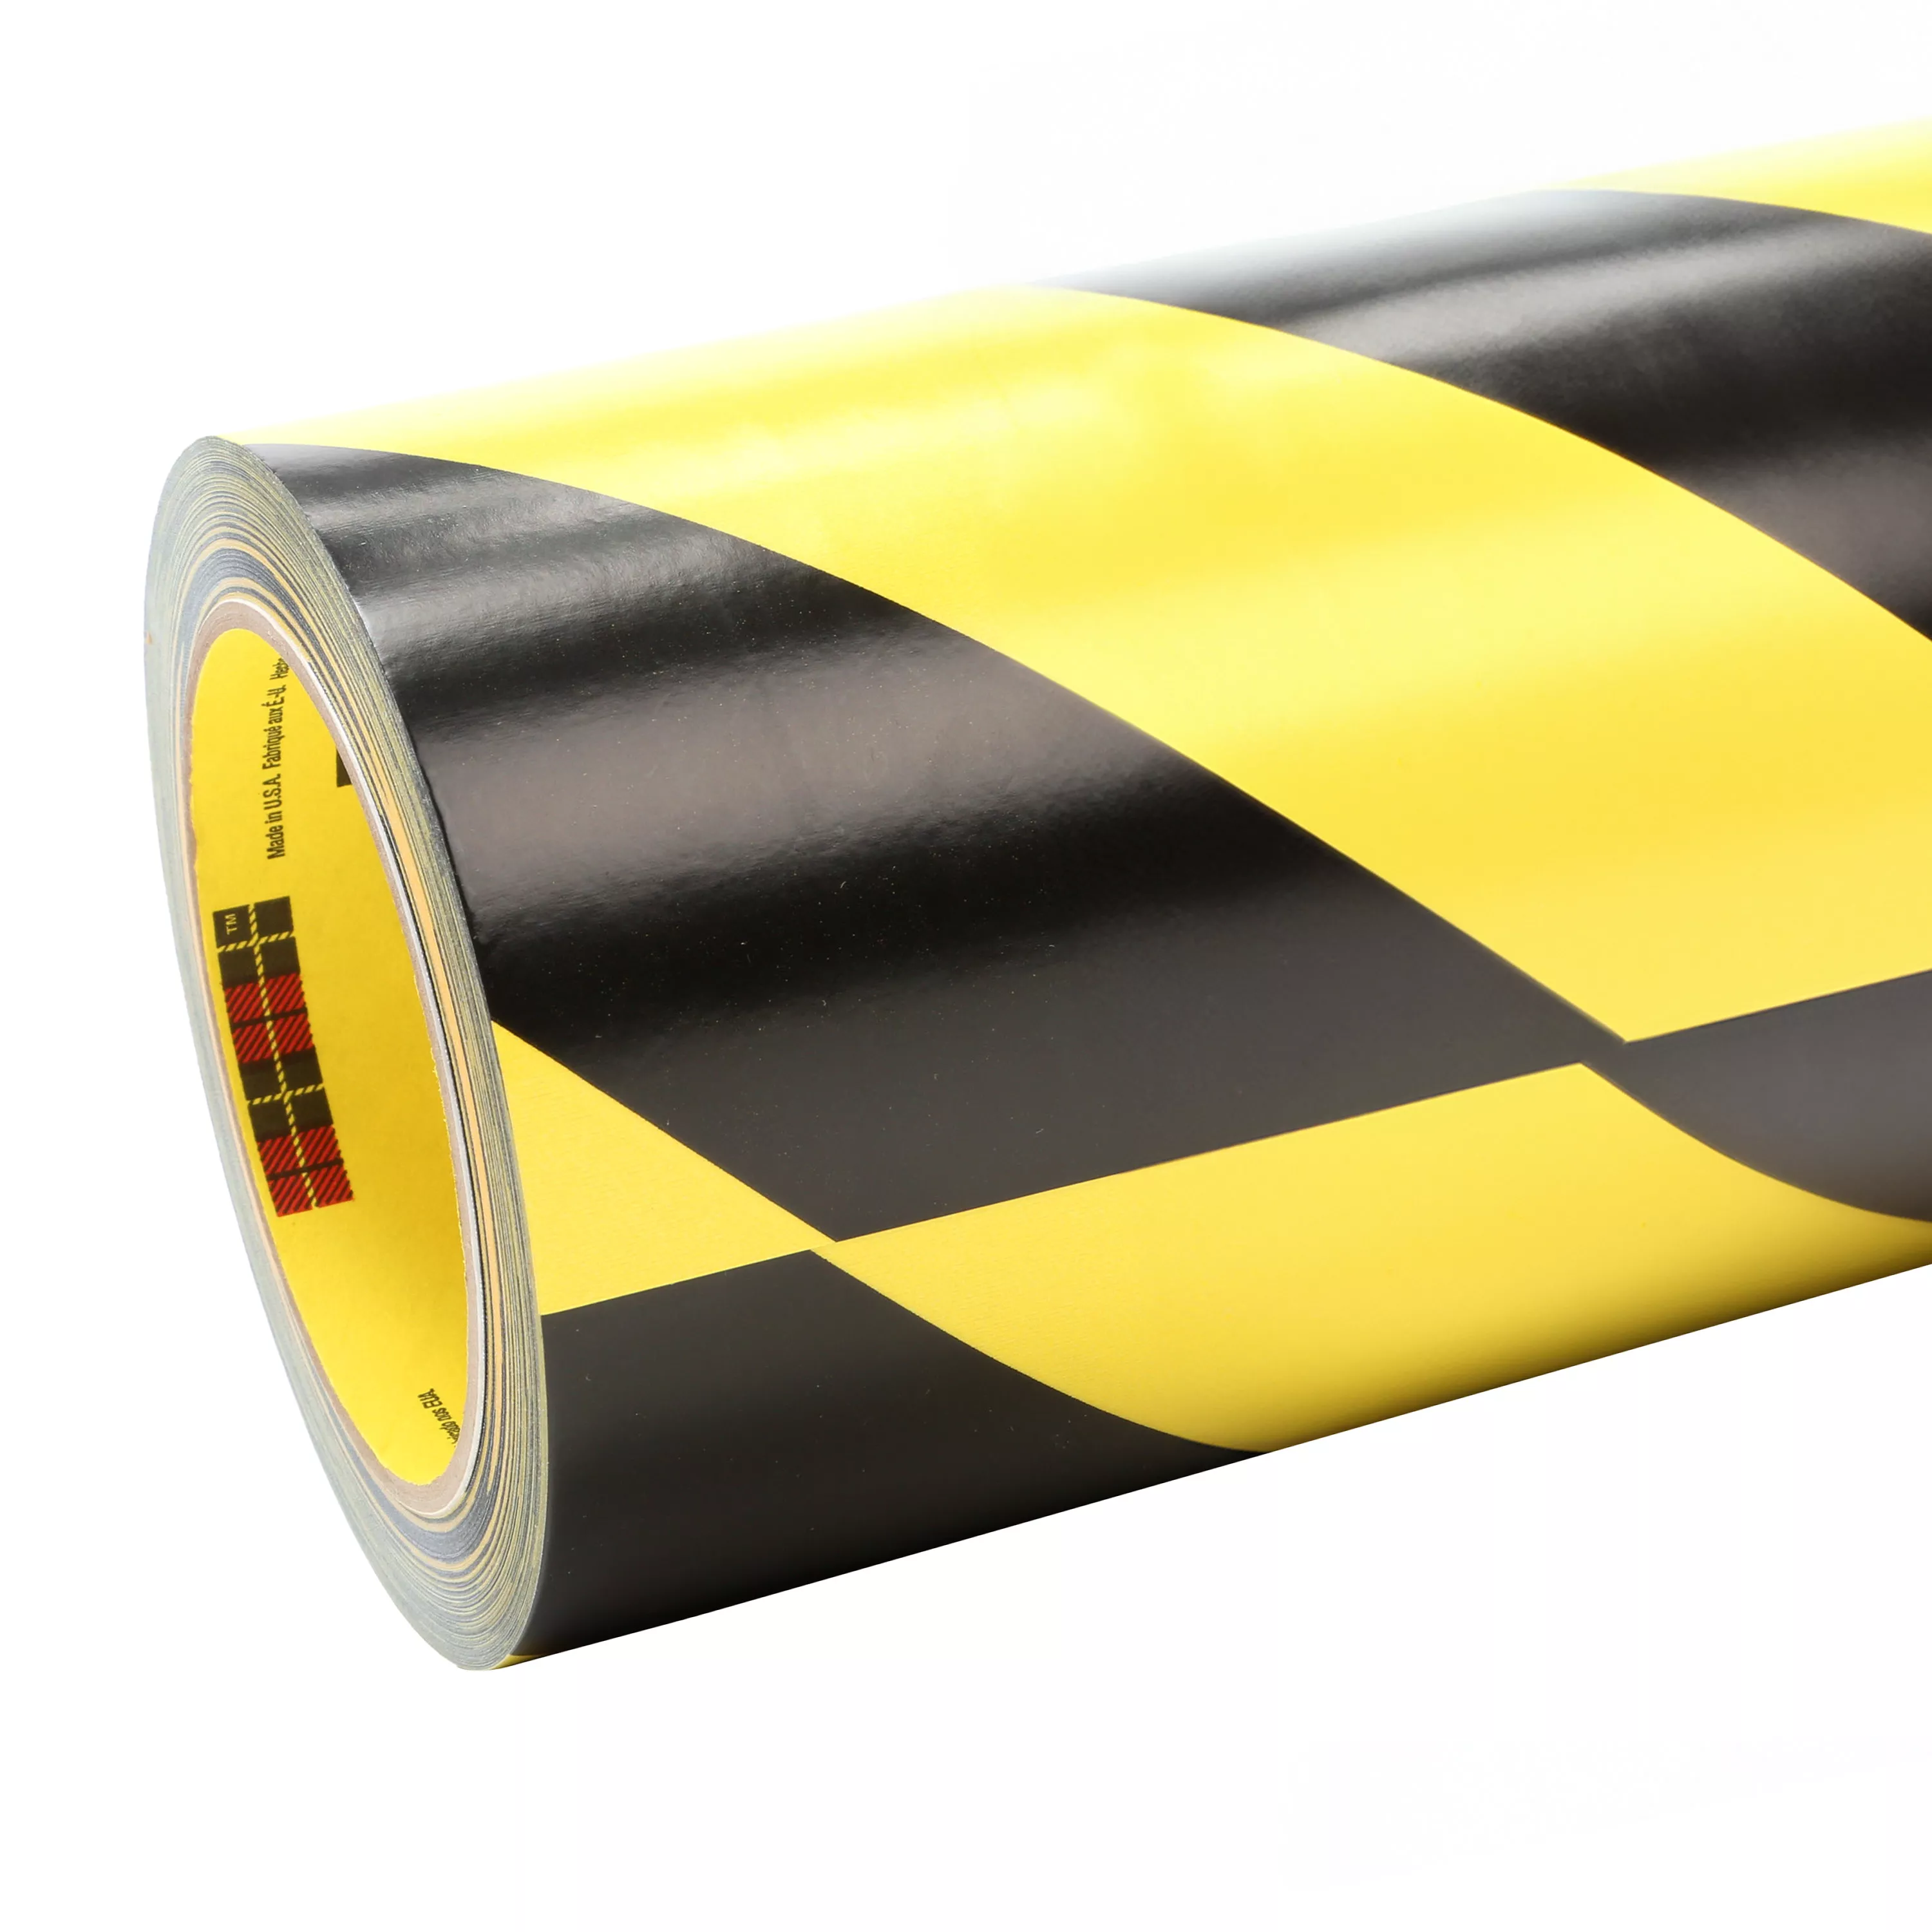 3M™ Safety Stripe Tape 5702, Black/Yellow, 48 in x 36 yd, 5.4 mil, 4
rolls per case